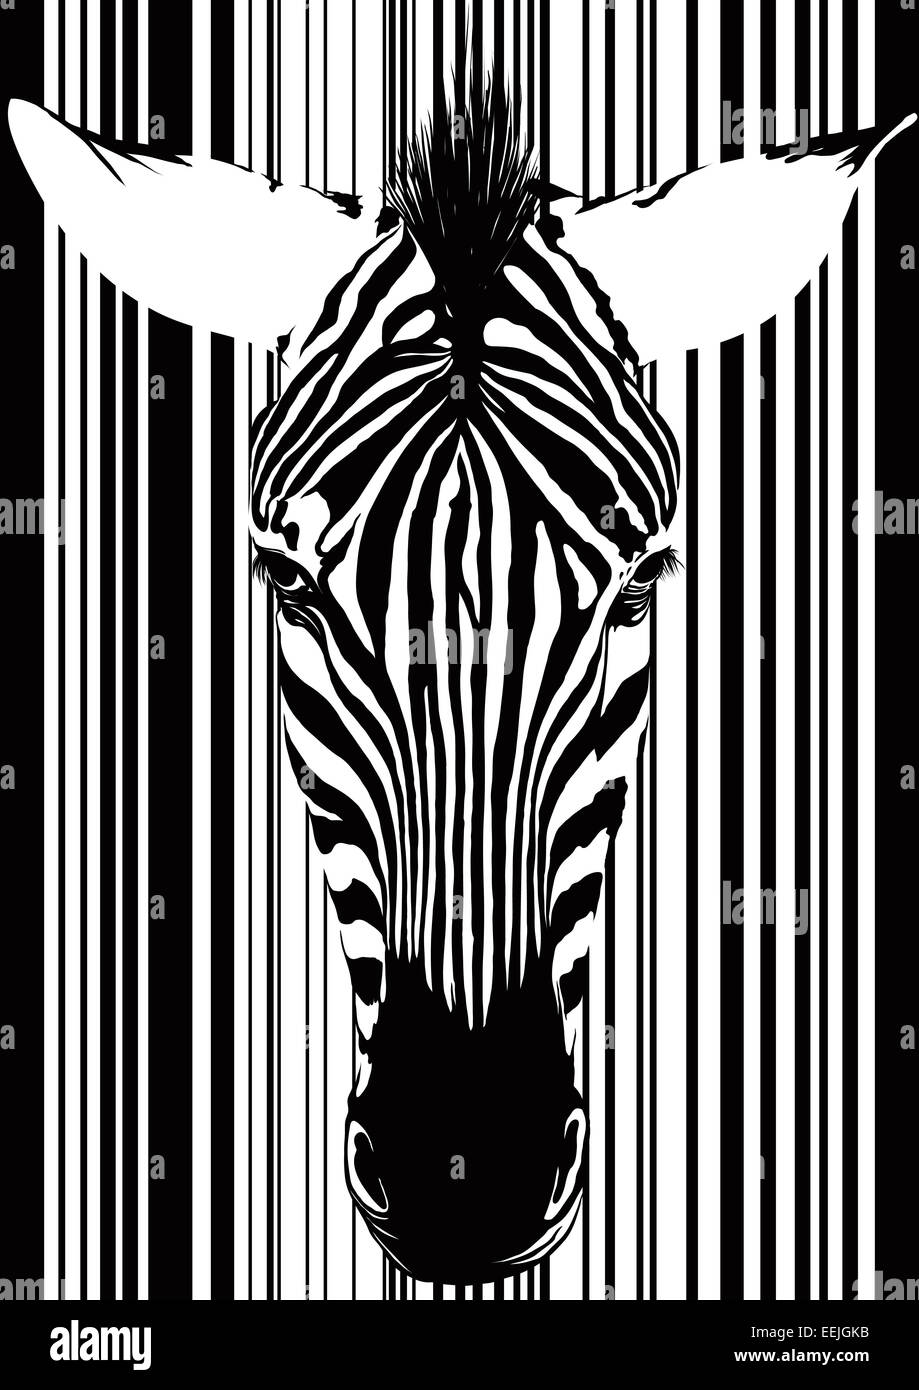 Zebra Barcode Face Stock Photo